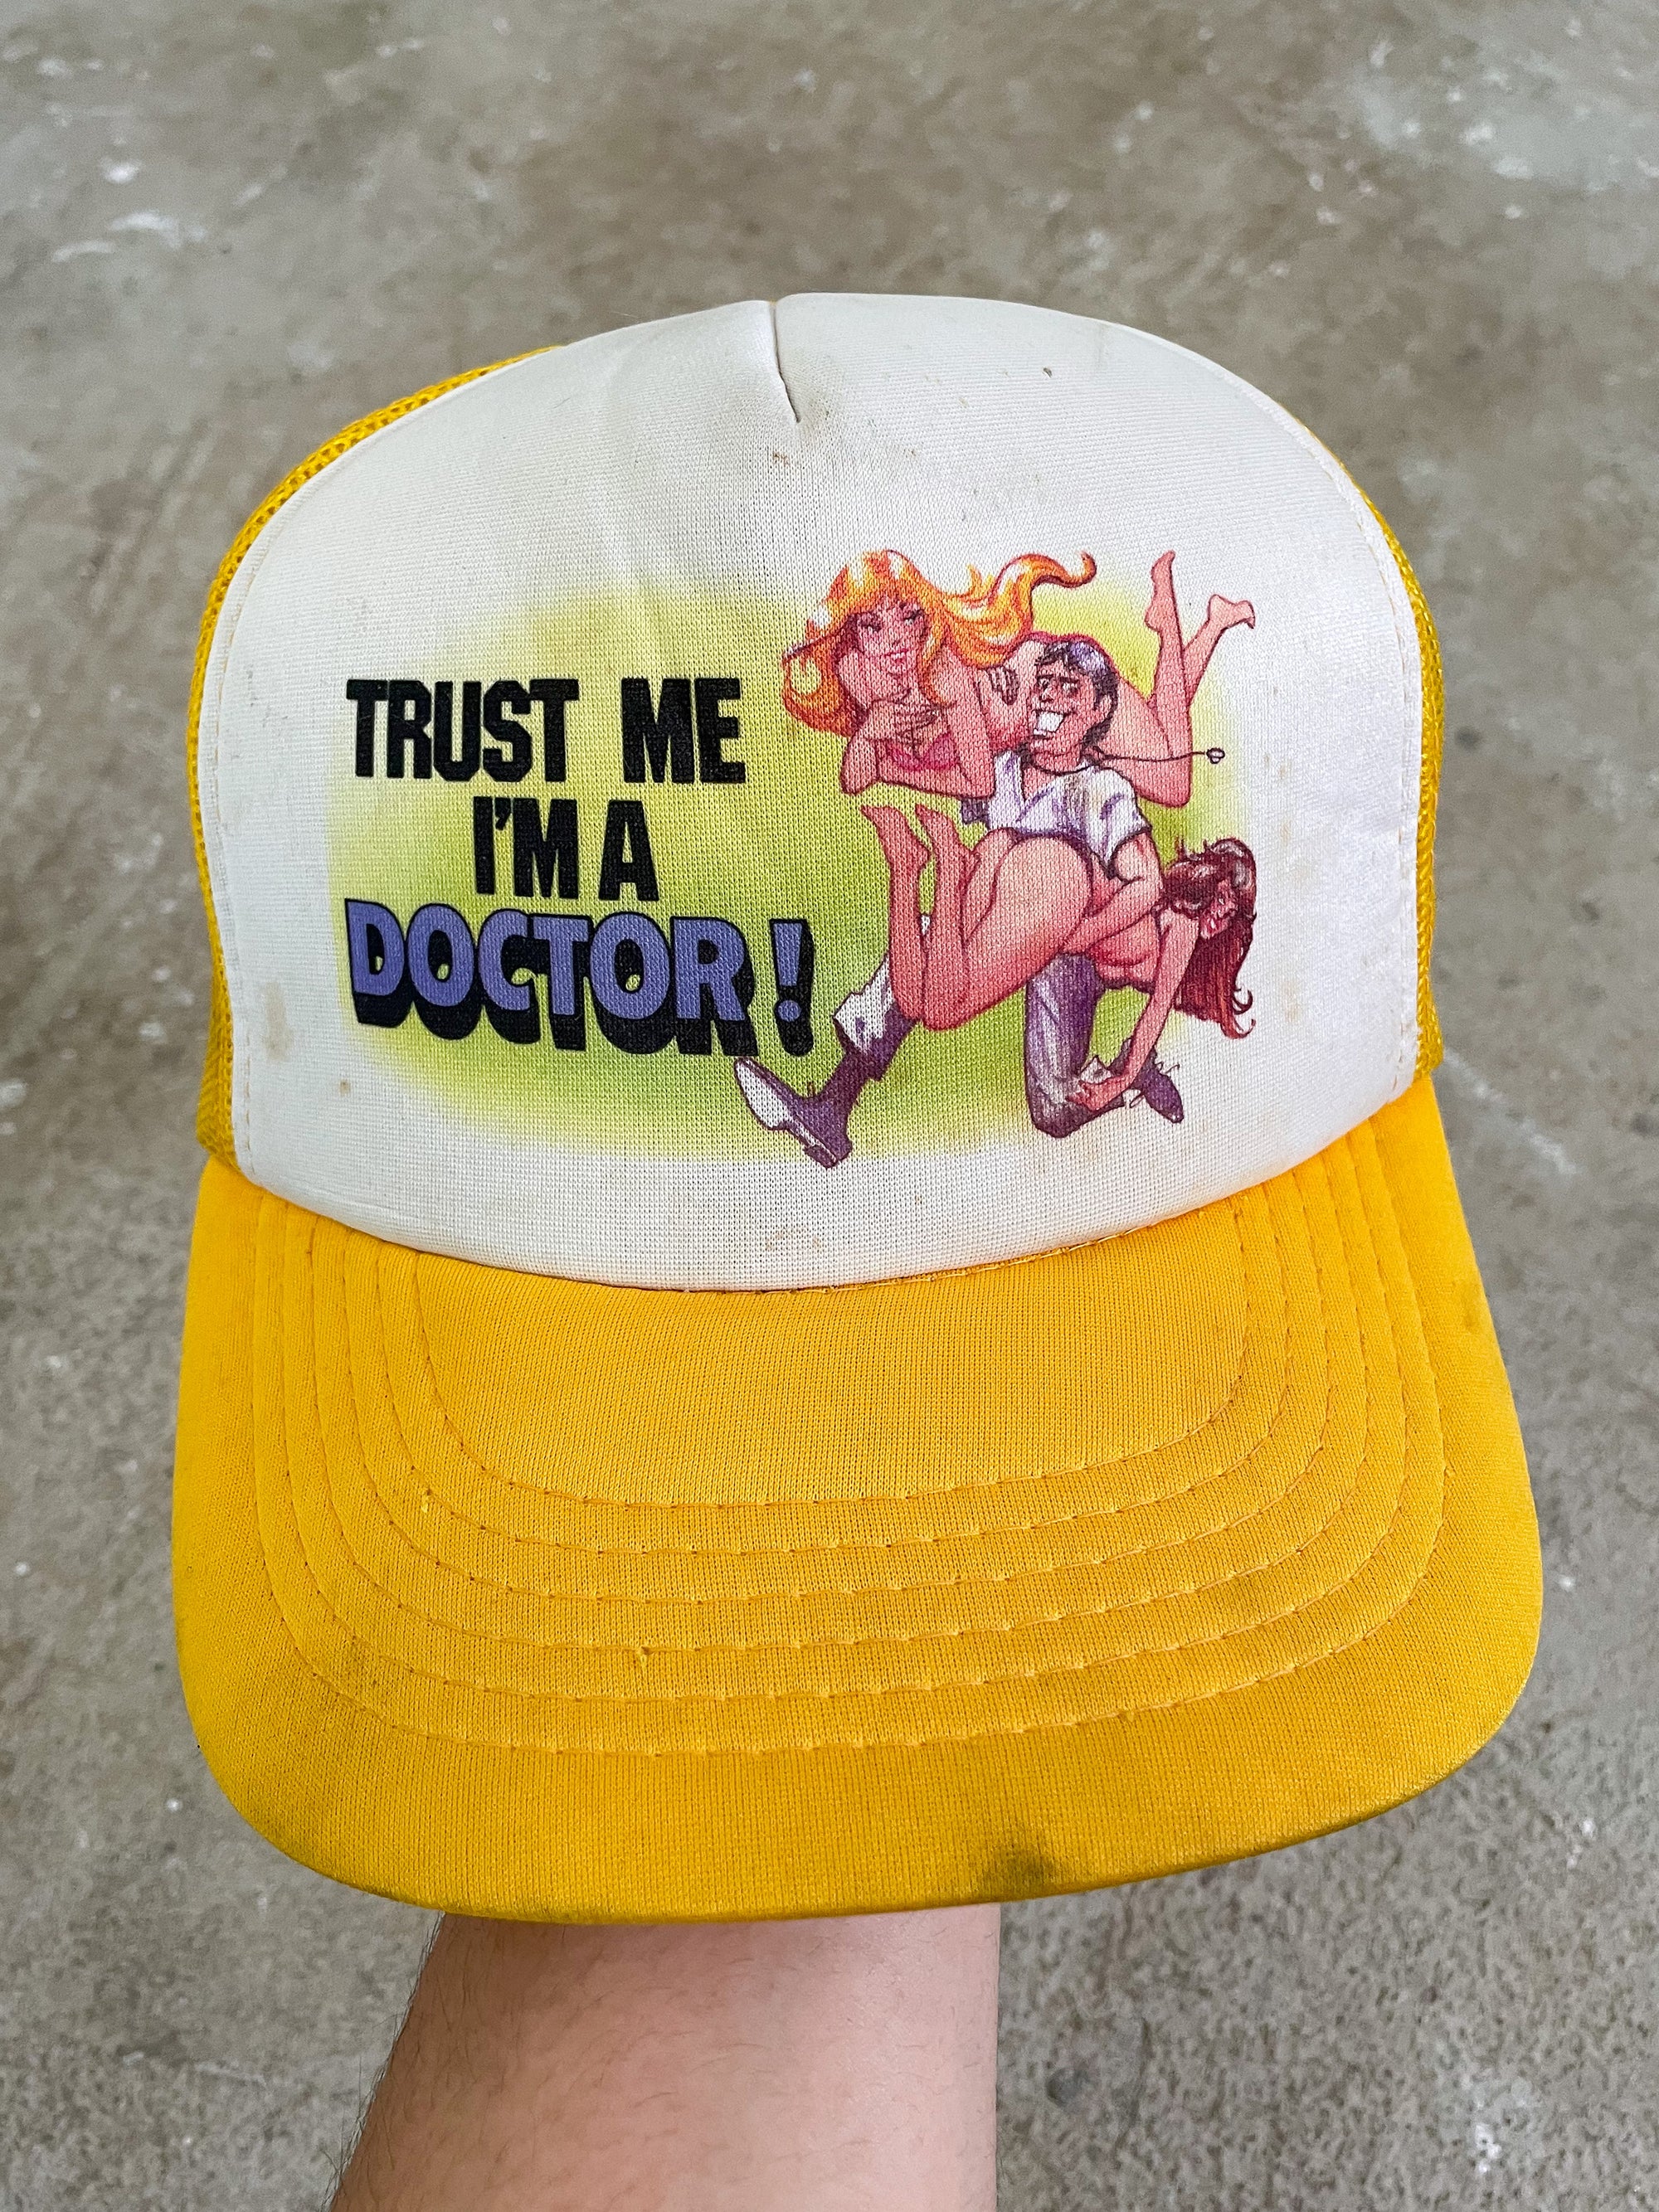 1980s “Trust Me I’m A Doctor!” Trucker Hat